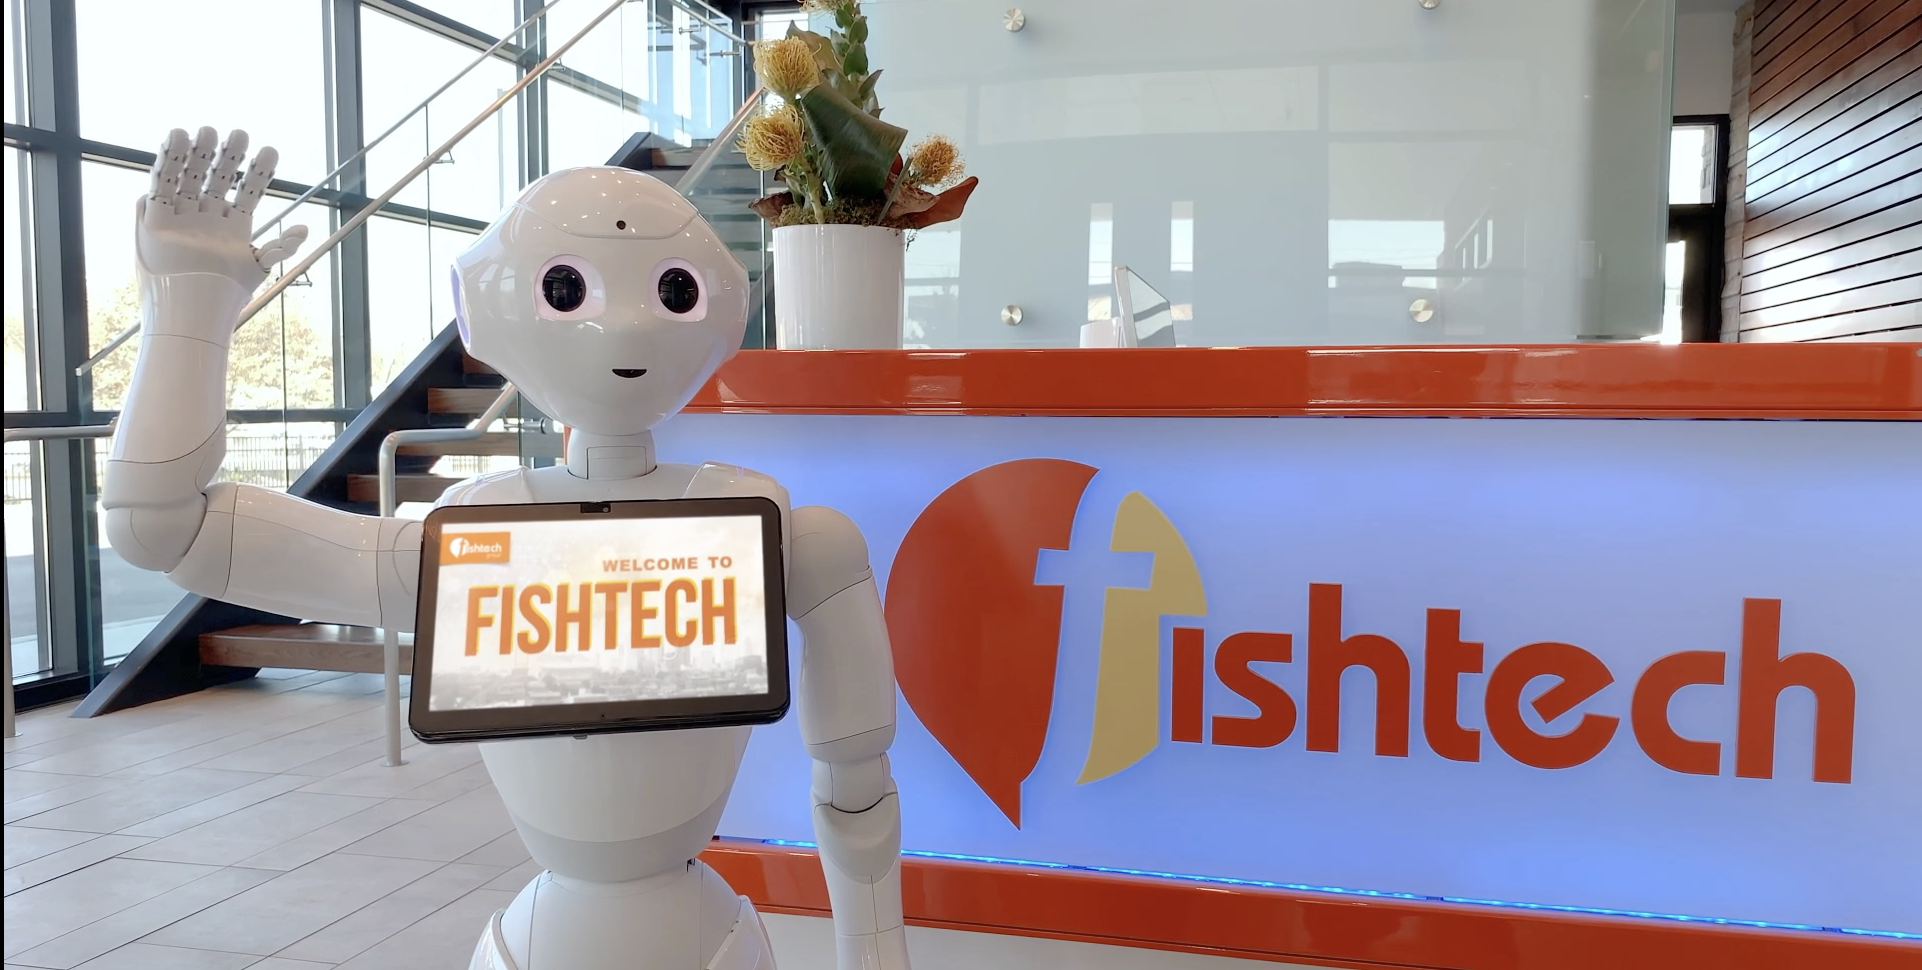 Fishtech robot